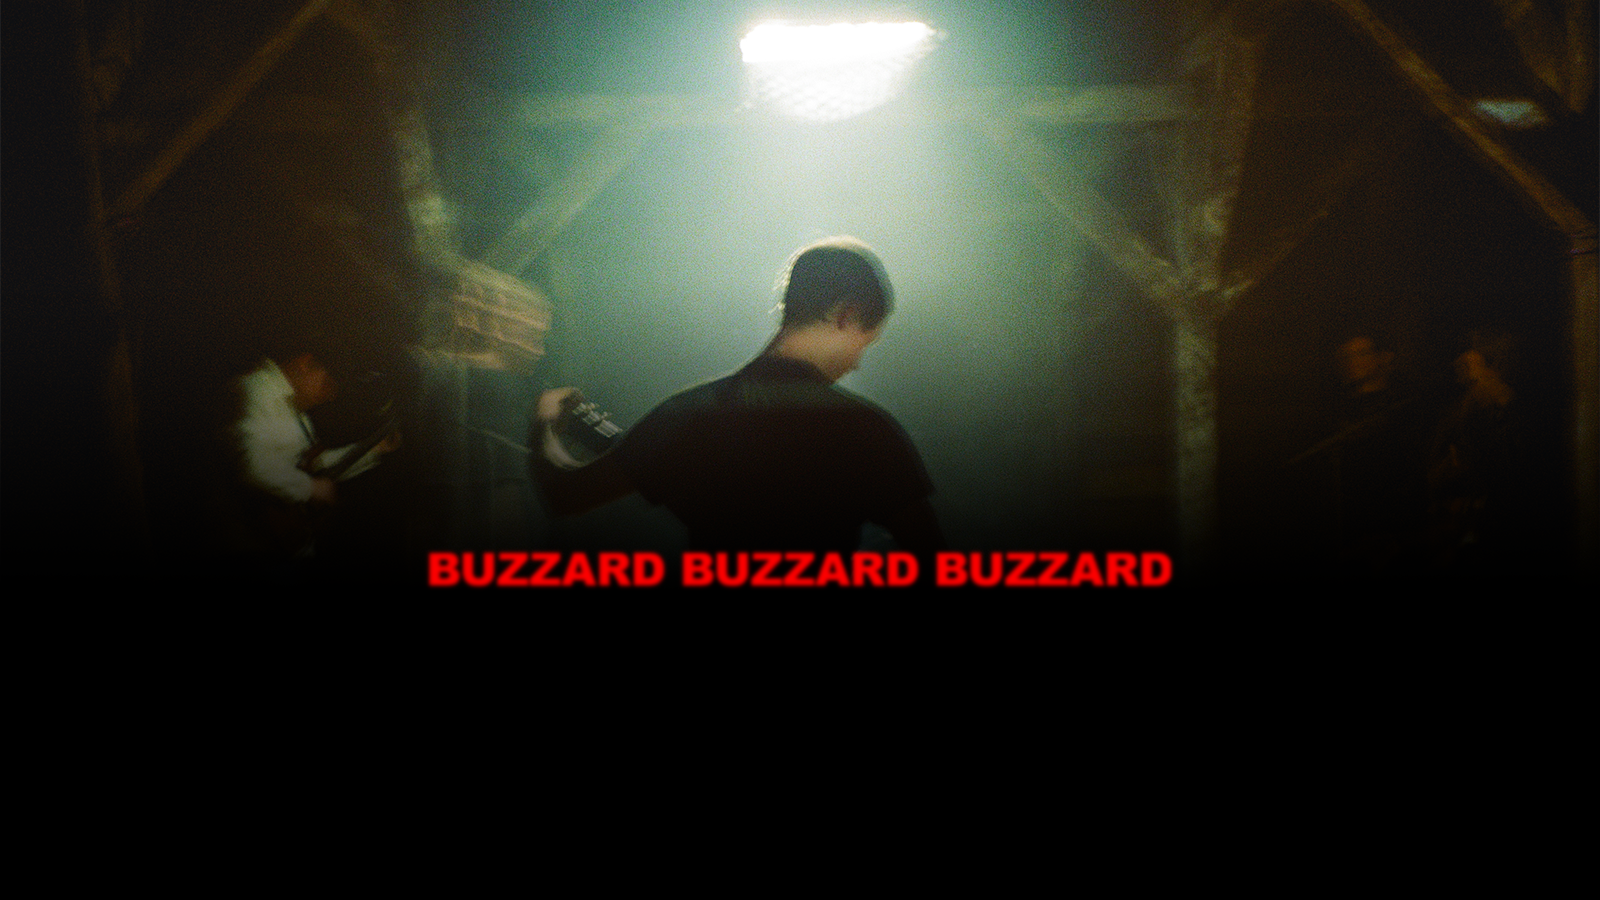 Buzzard Buzzard Buzzard Live in Sunderland